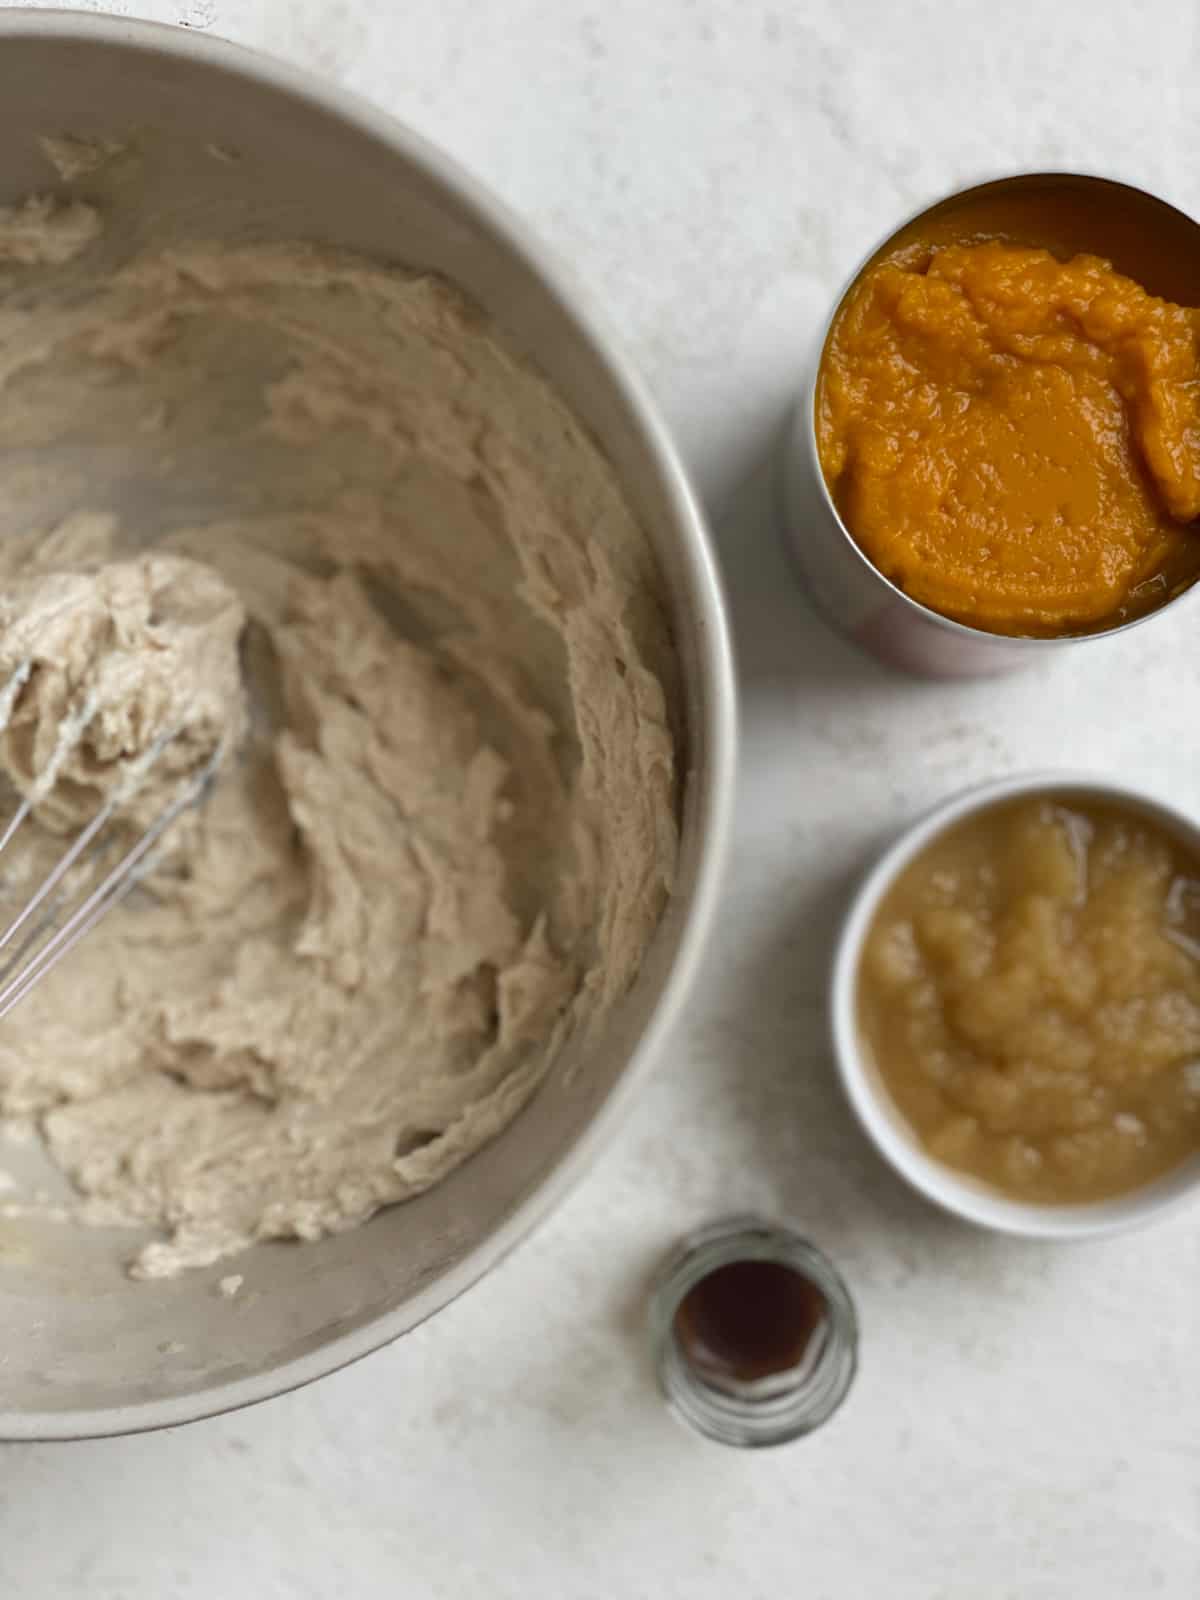 creamed vegan butter mixture in a bowl alongside ingredients for Vegan Pumpkin Chocolate Chip Cookies